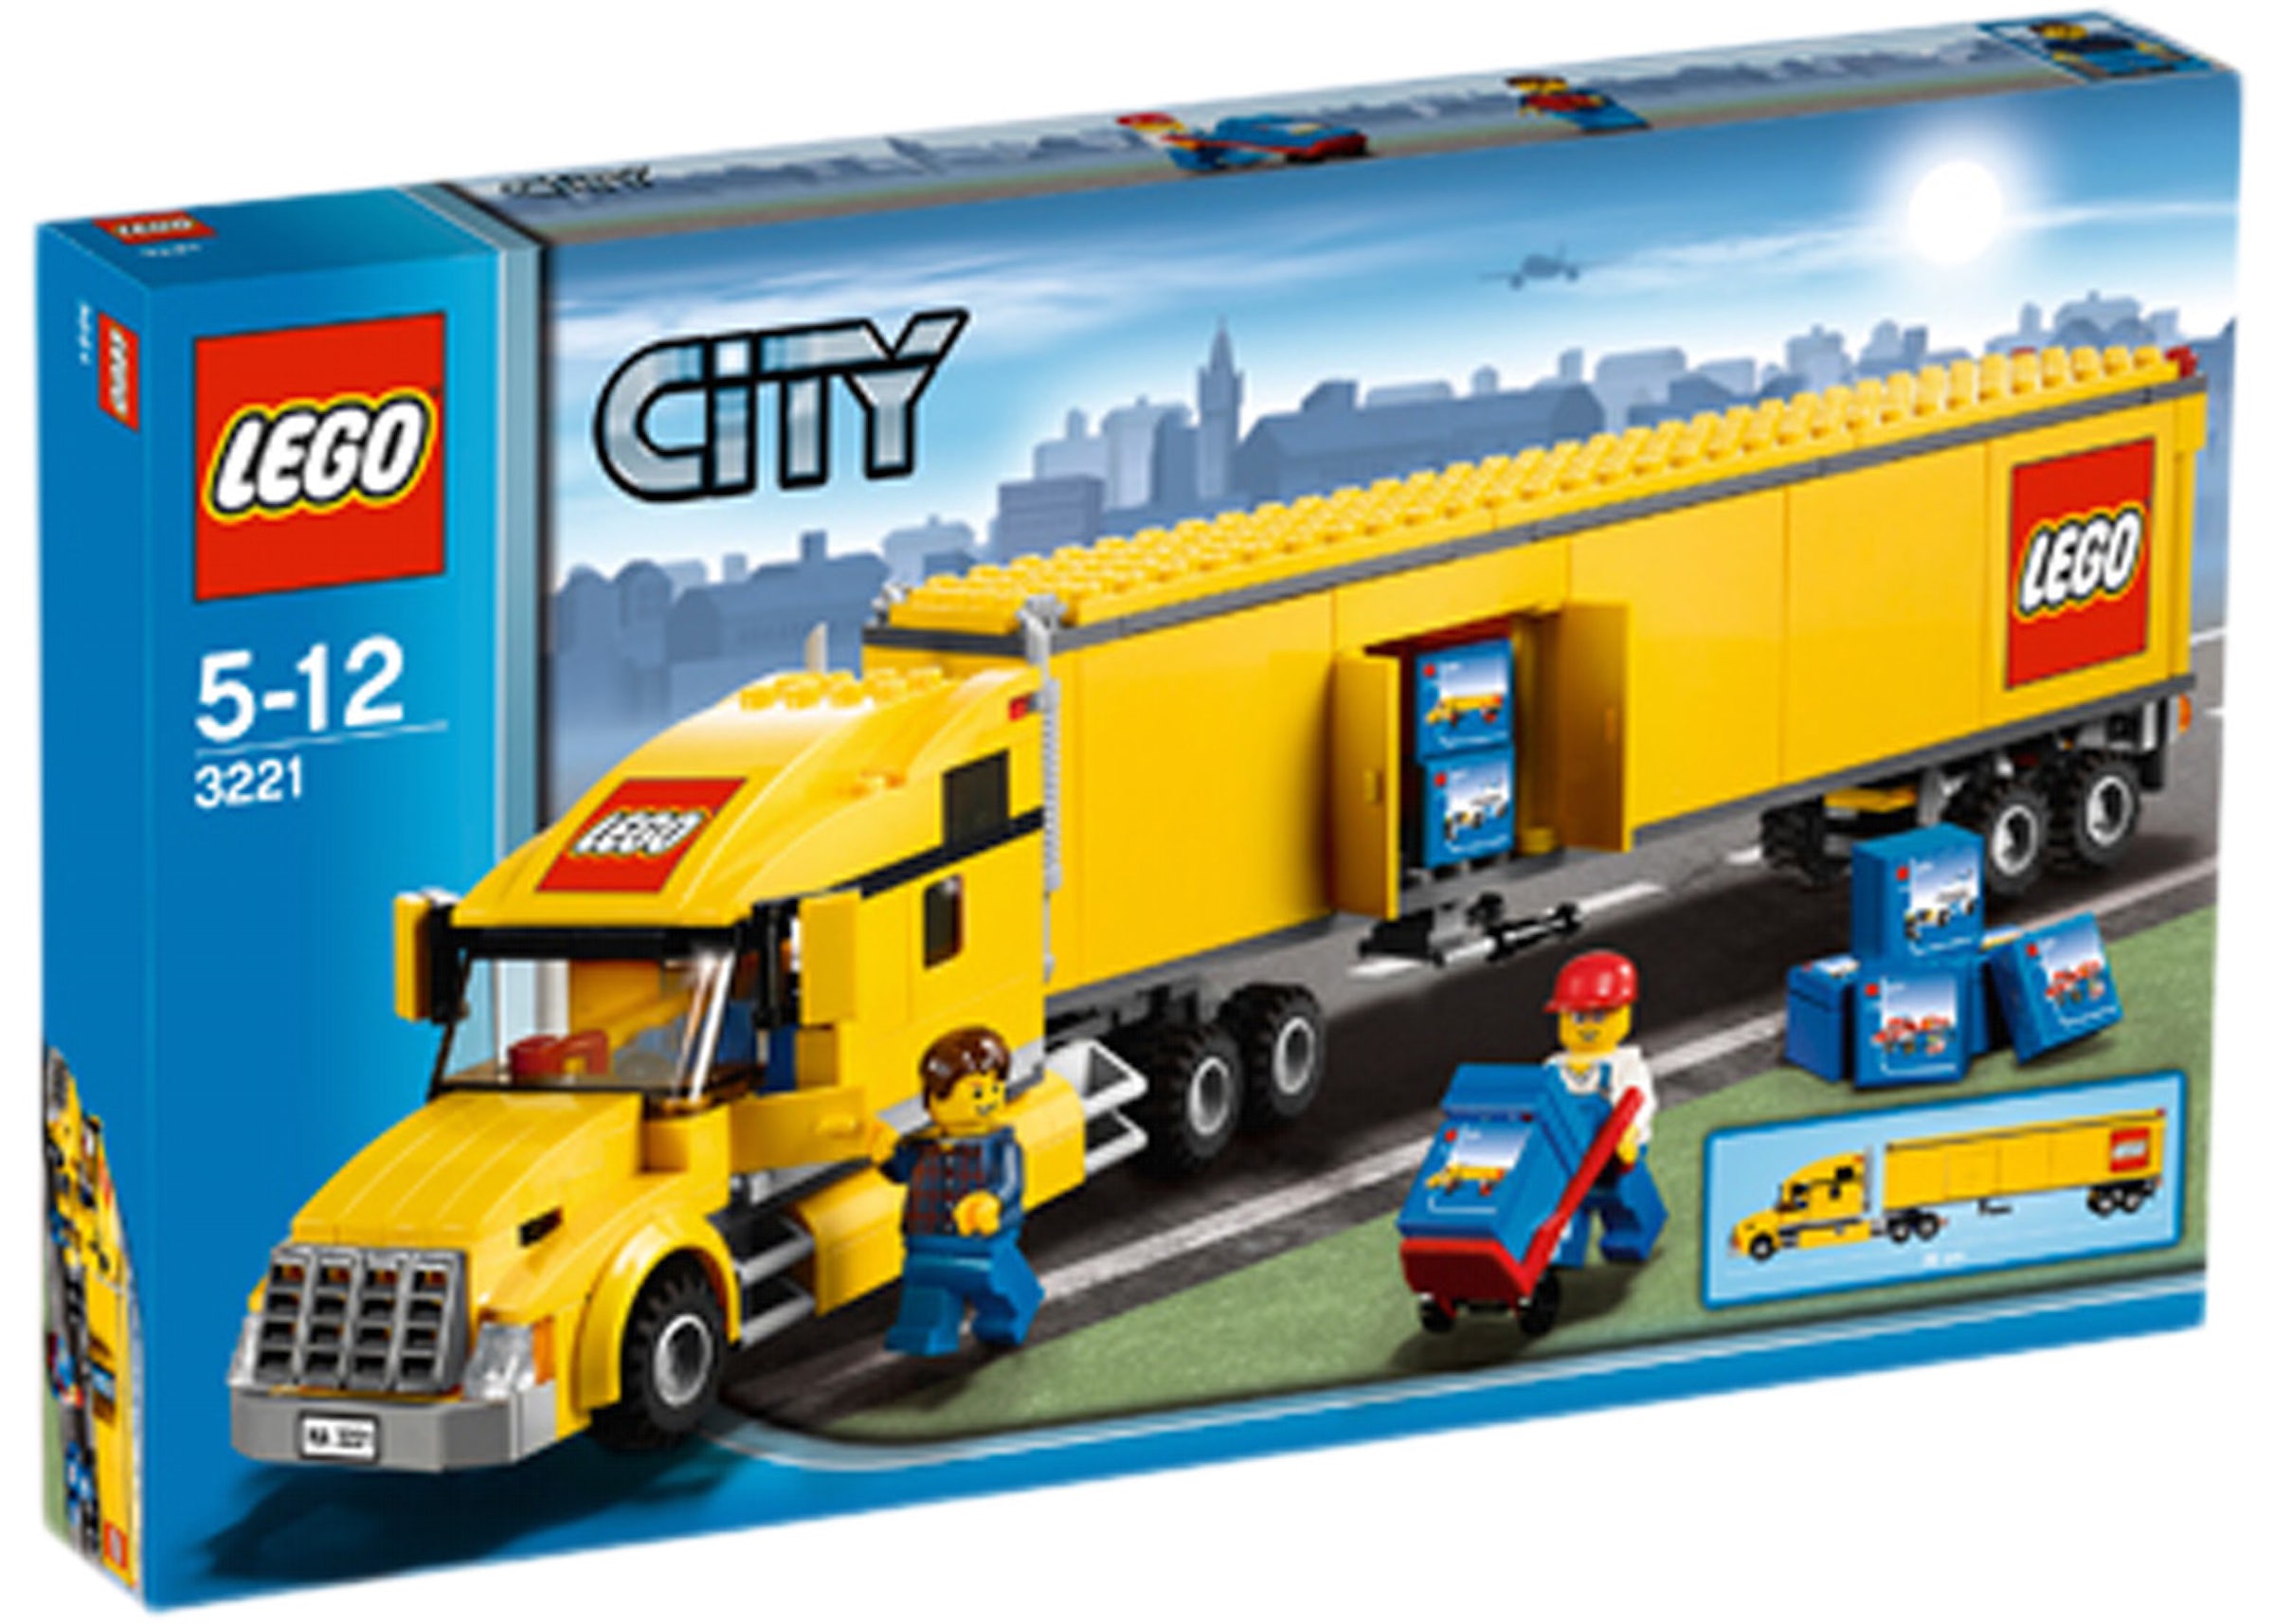 LEGO City Truck Set 3221 - US